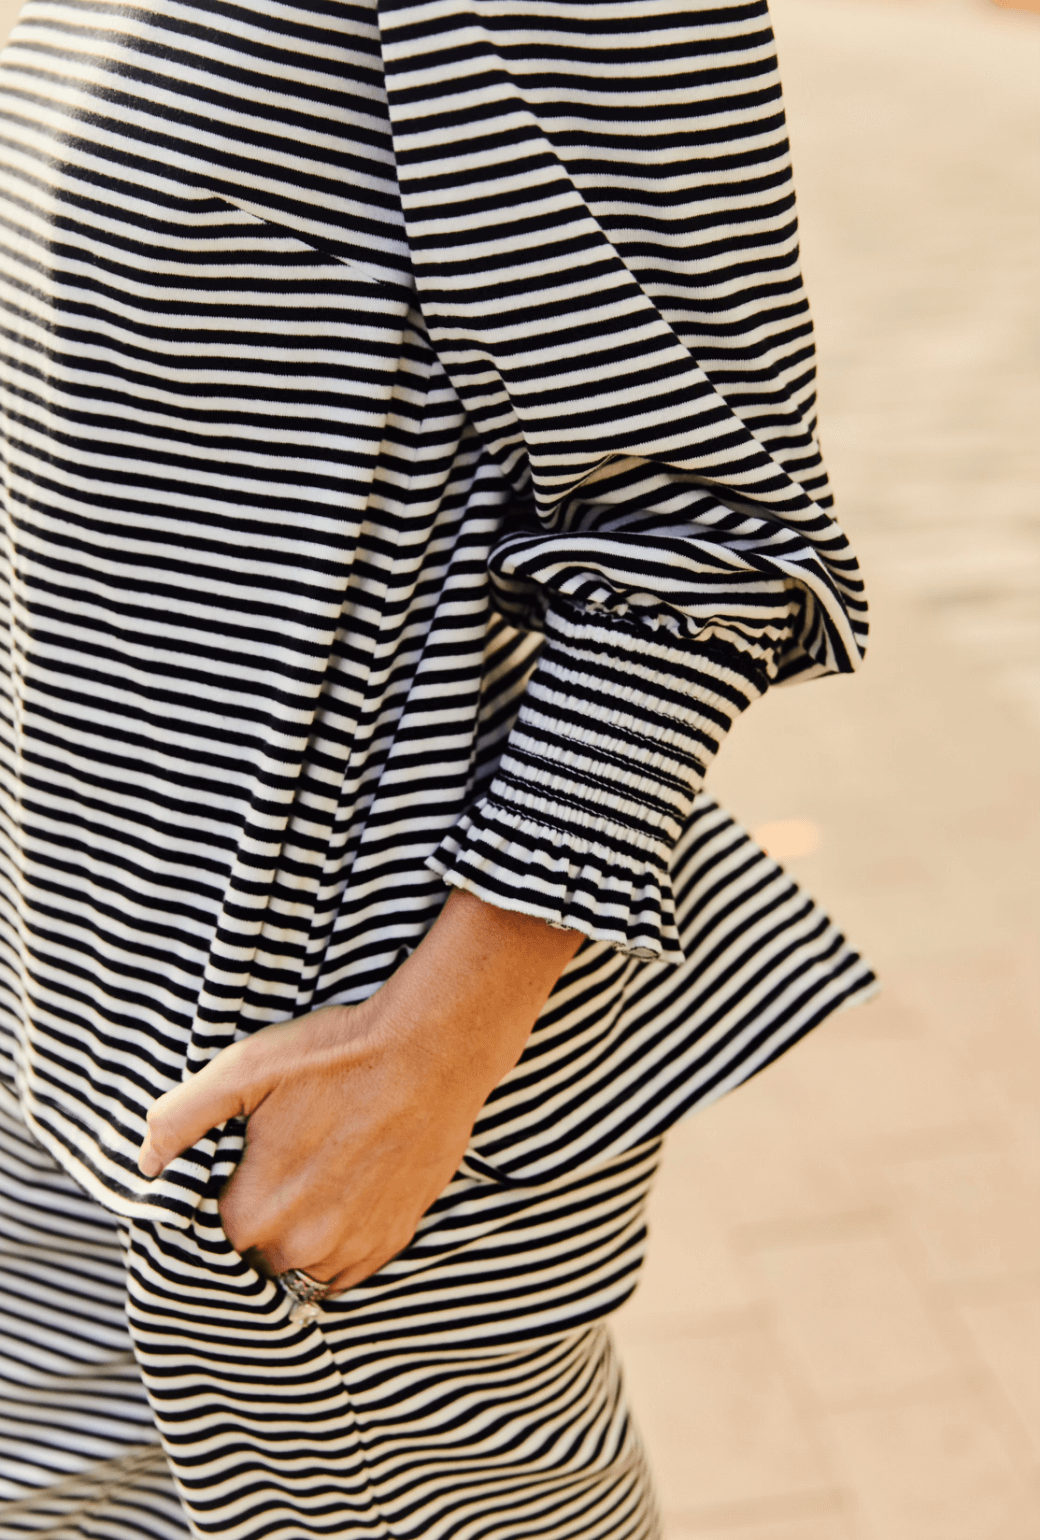 Long Sleeve Mod Top - Black & White Knit